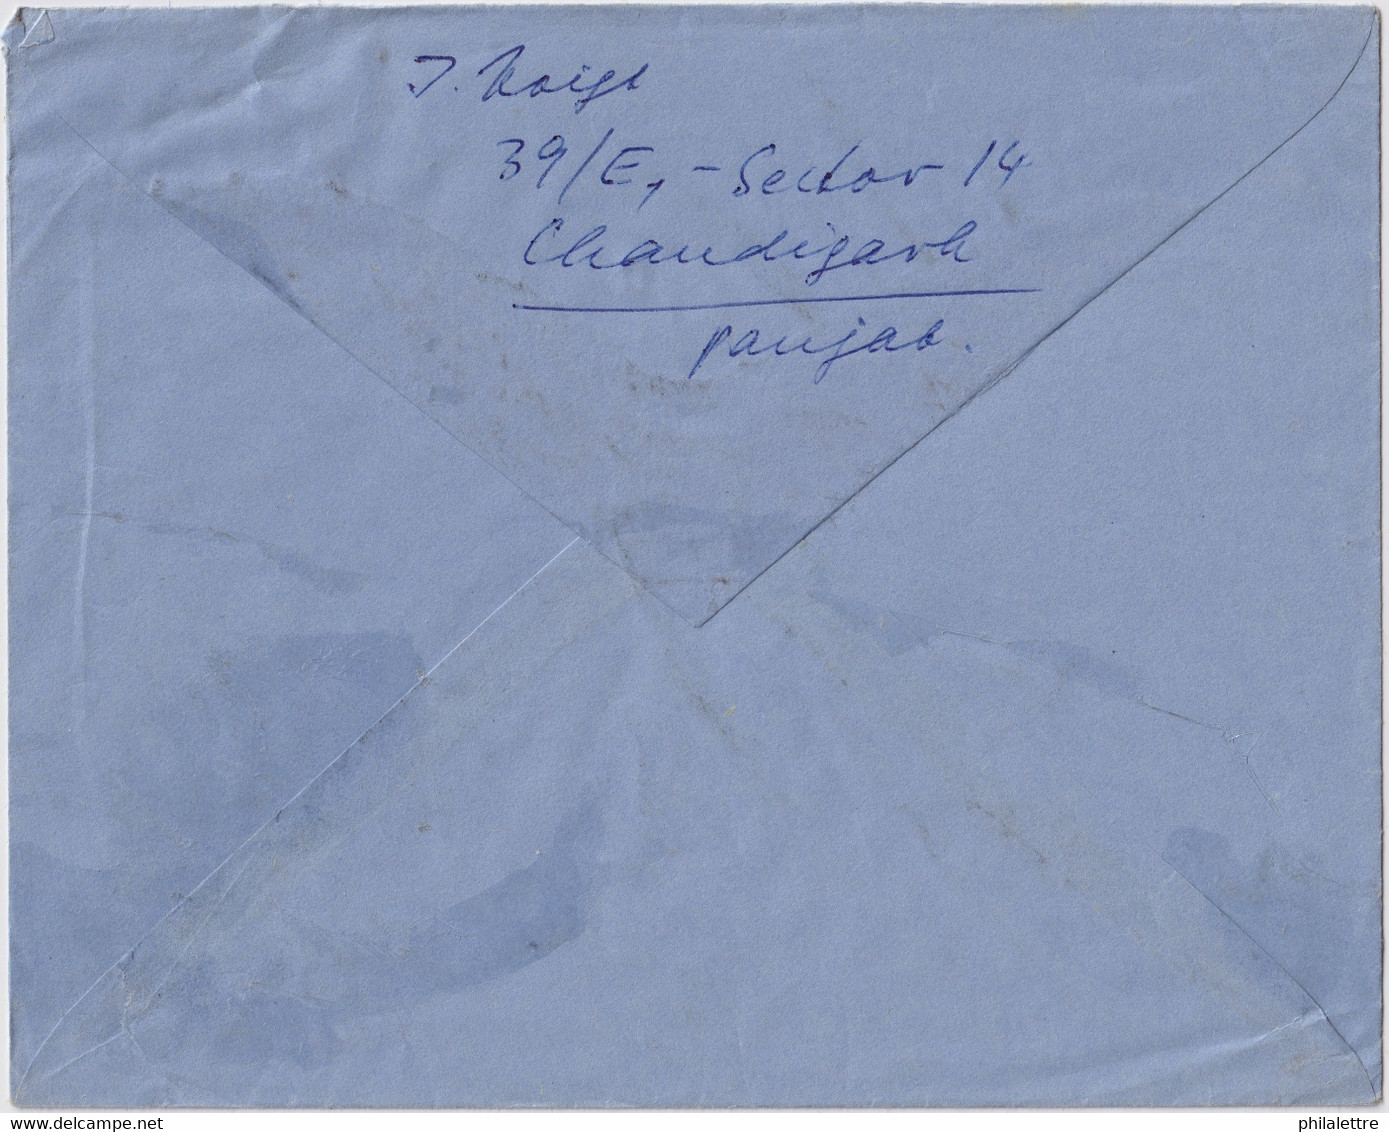 INDE / INDIA - 1962 - Air Mail Postal Envelope From CHANDIGARH To Kiel, Germany - Aerogramas